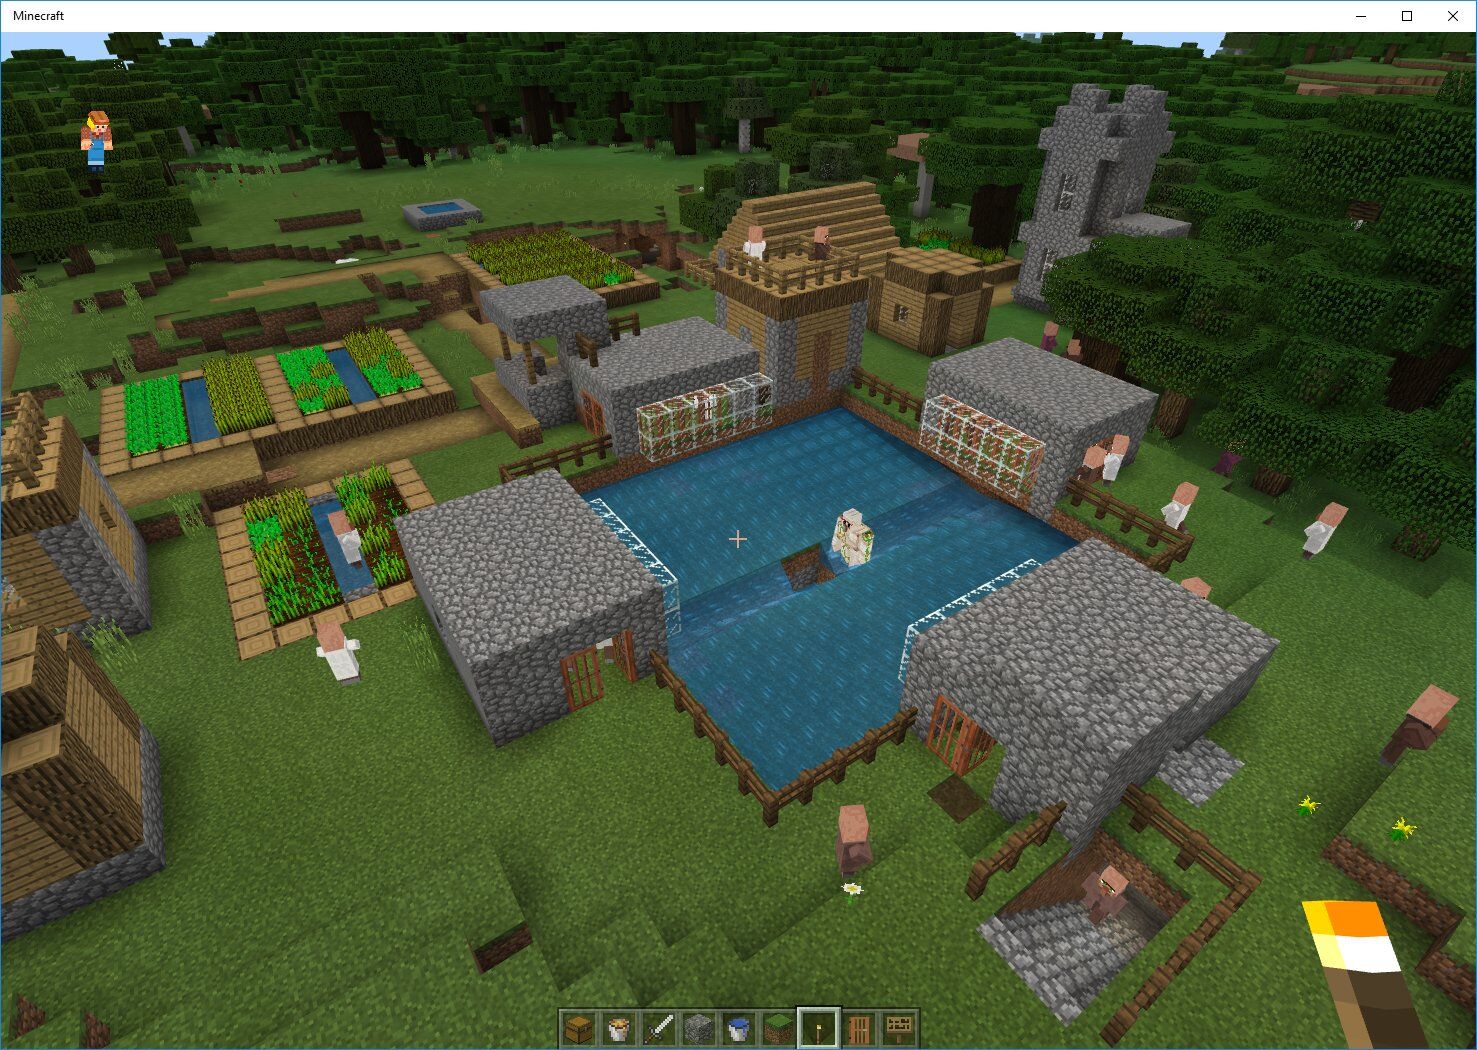 Built an enderman farm in main world close to my base. Need advice